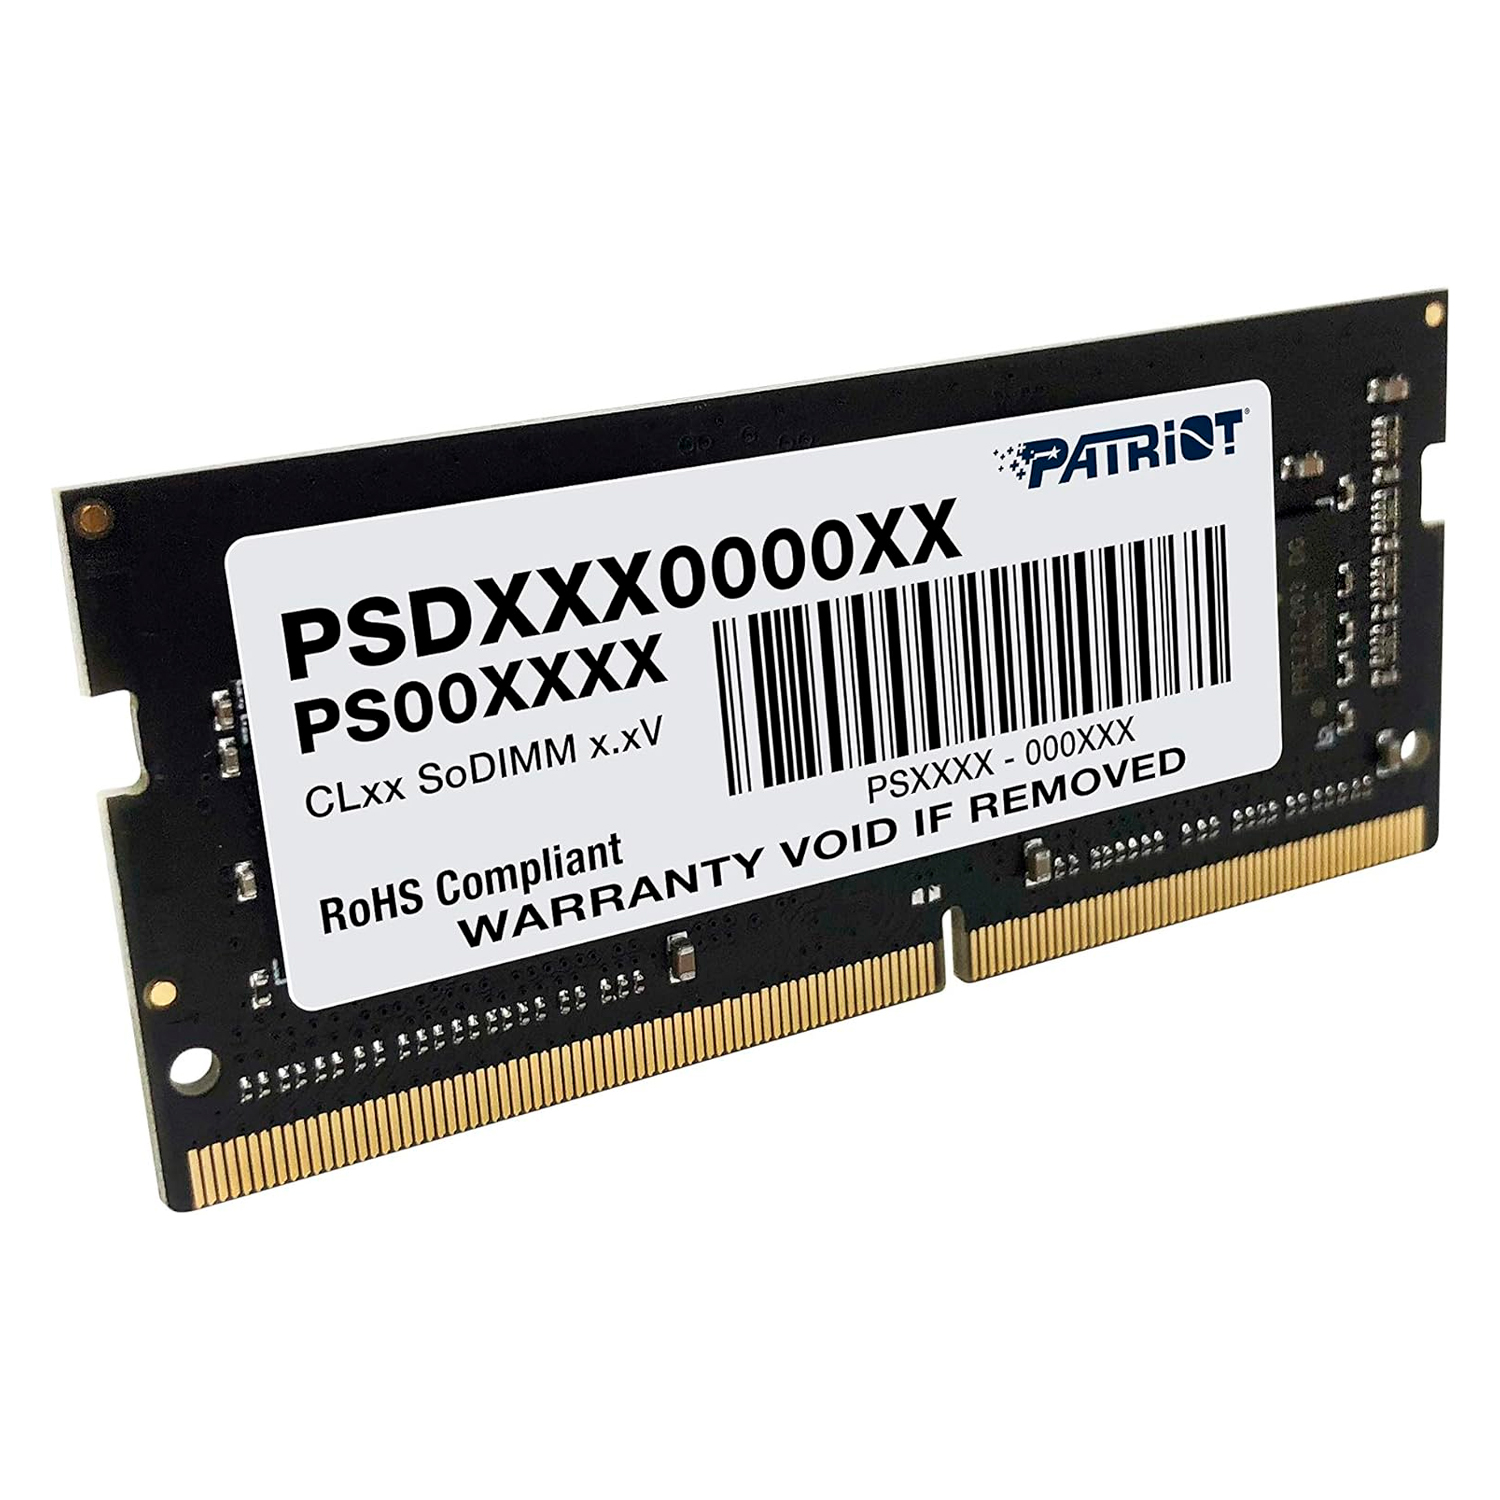 Memória RAM Patriot Signature 16GB DDR4 2400 MHz - PSD416G24002SS